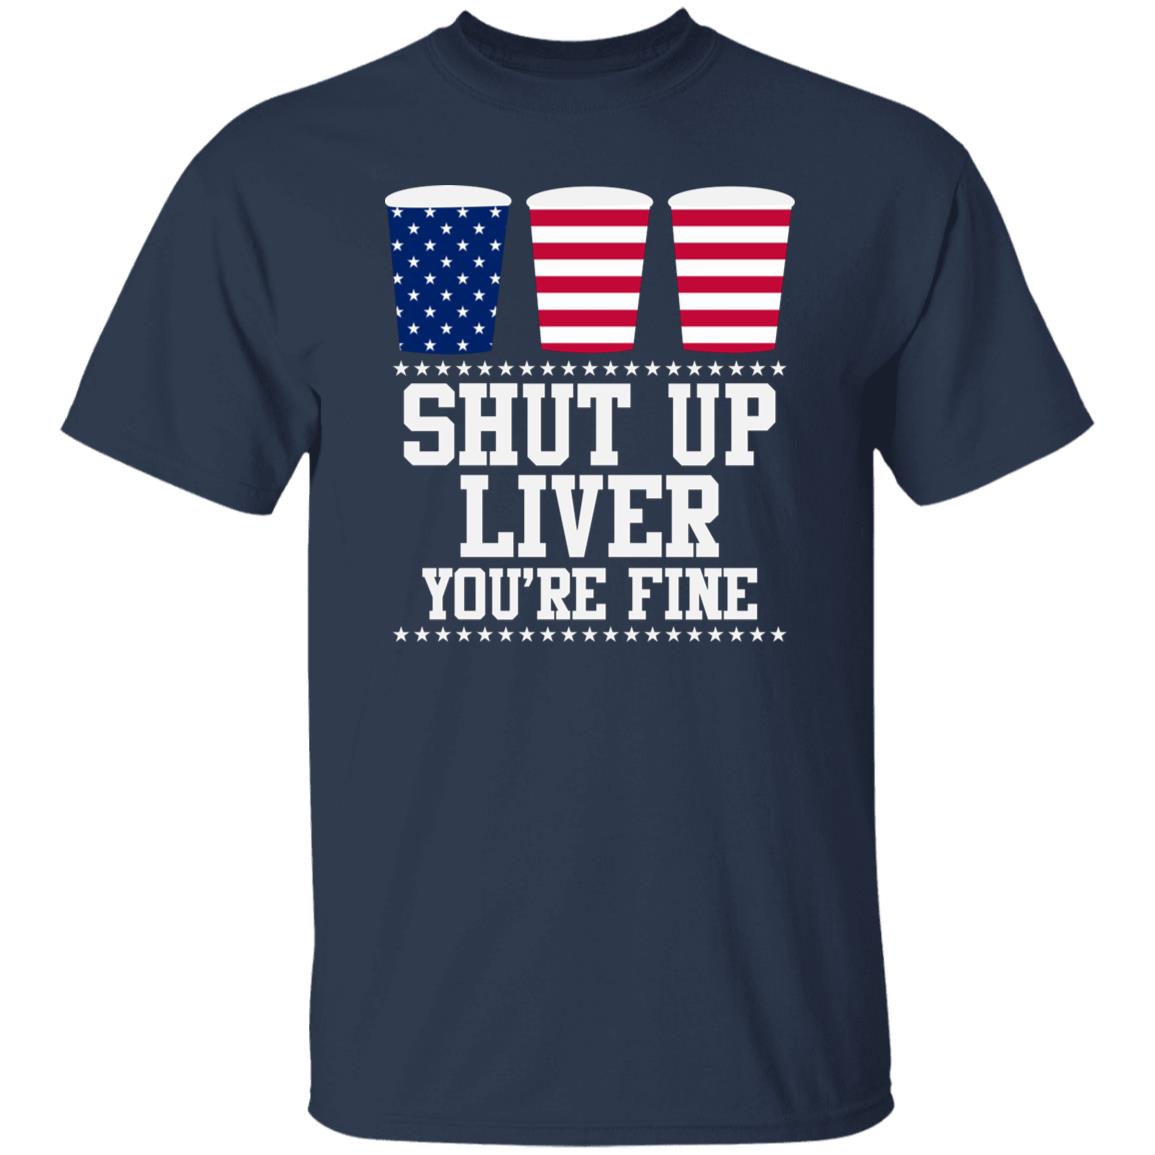 Shut Up Liver You're Fine Funny Shirt Beer US Flag Independence Day